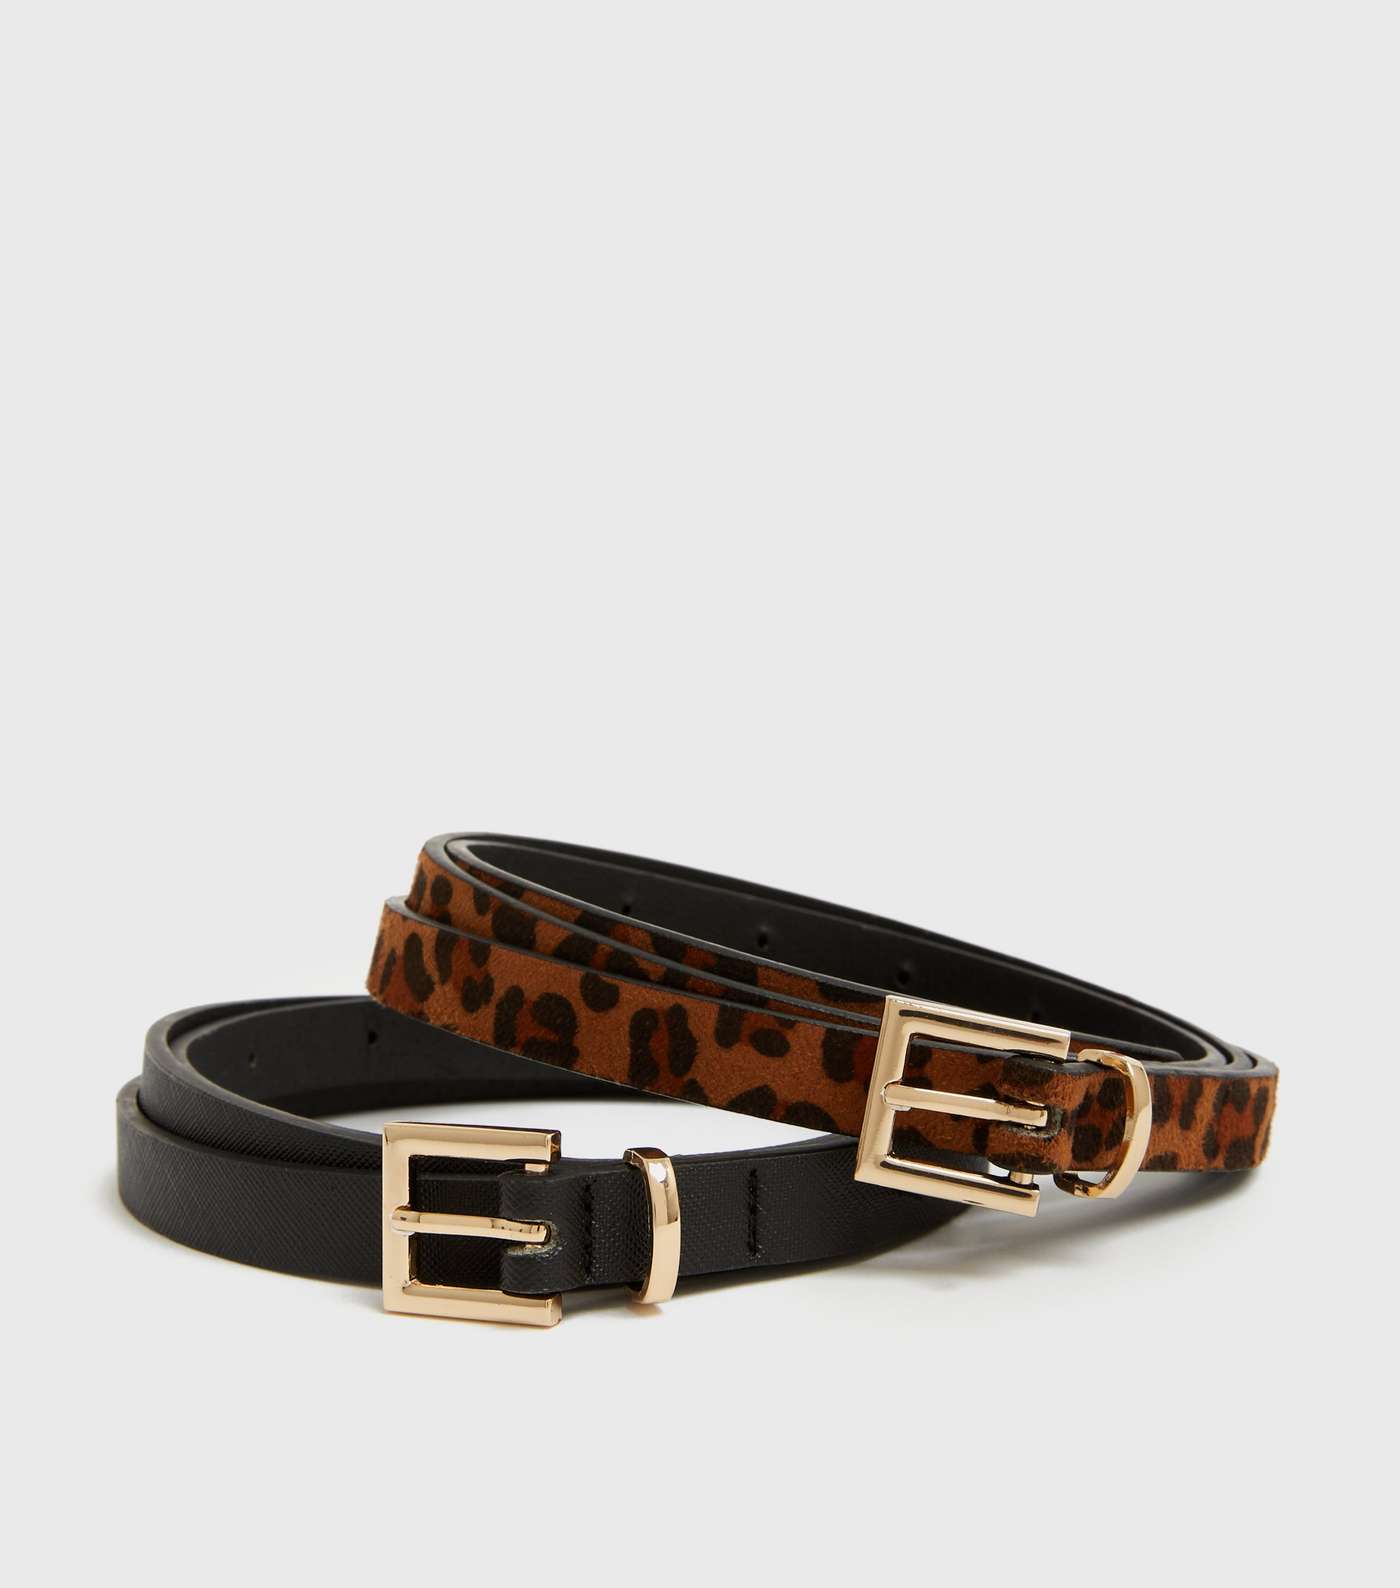 2 Pack Black and Leopard Print Skinny Belts